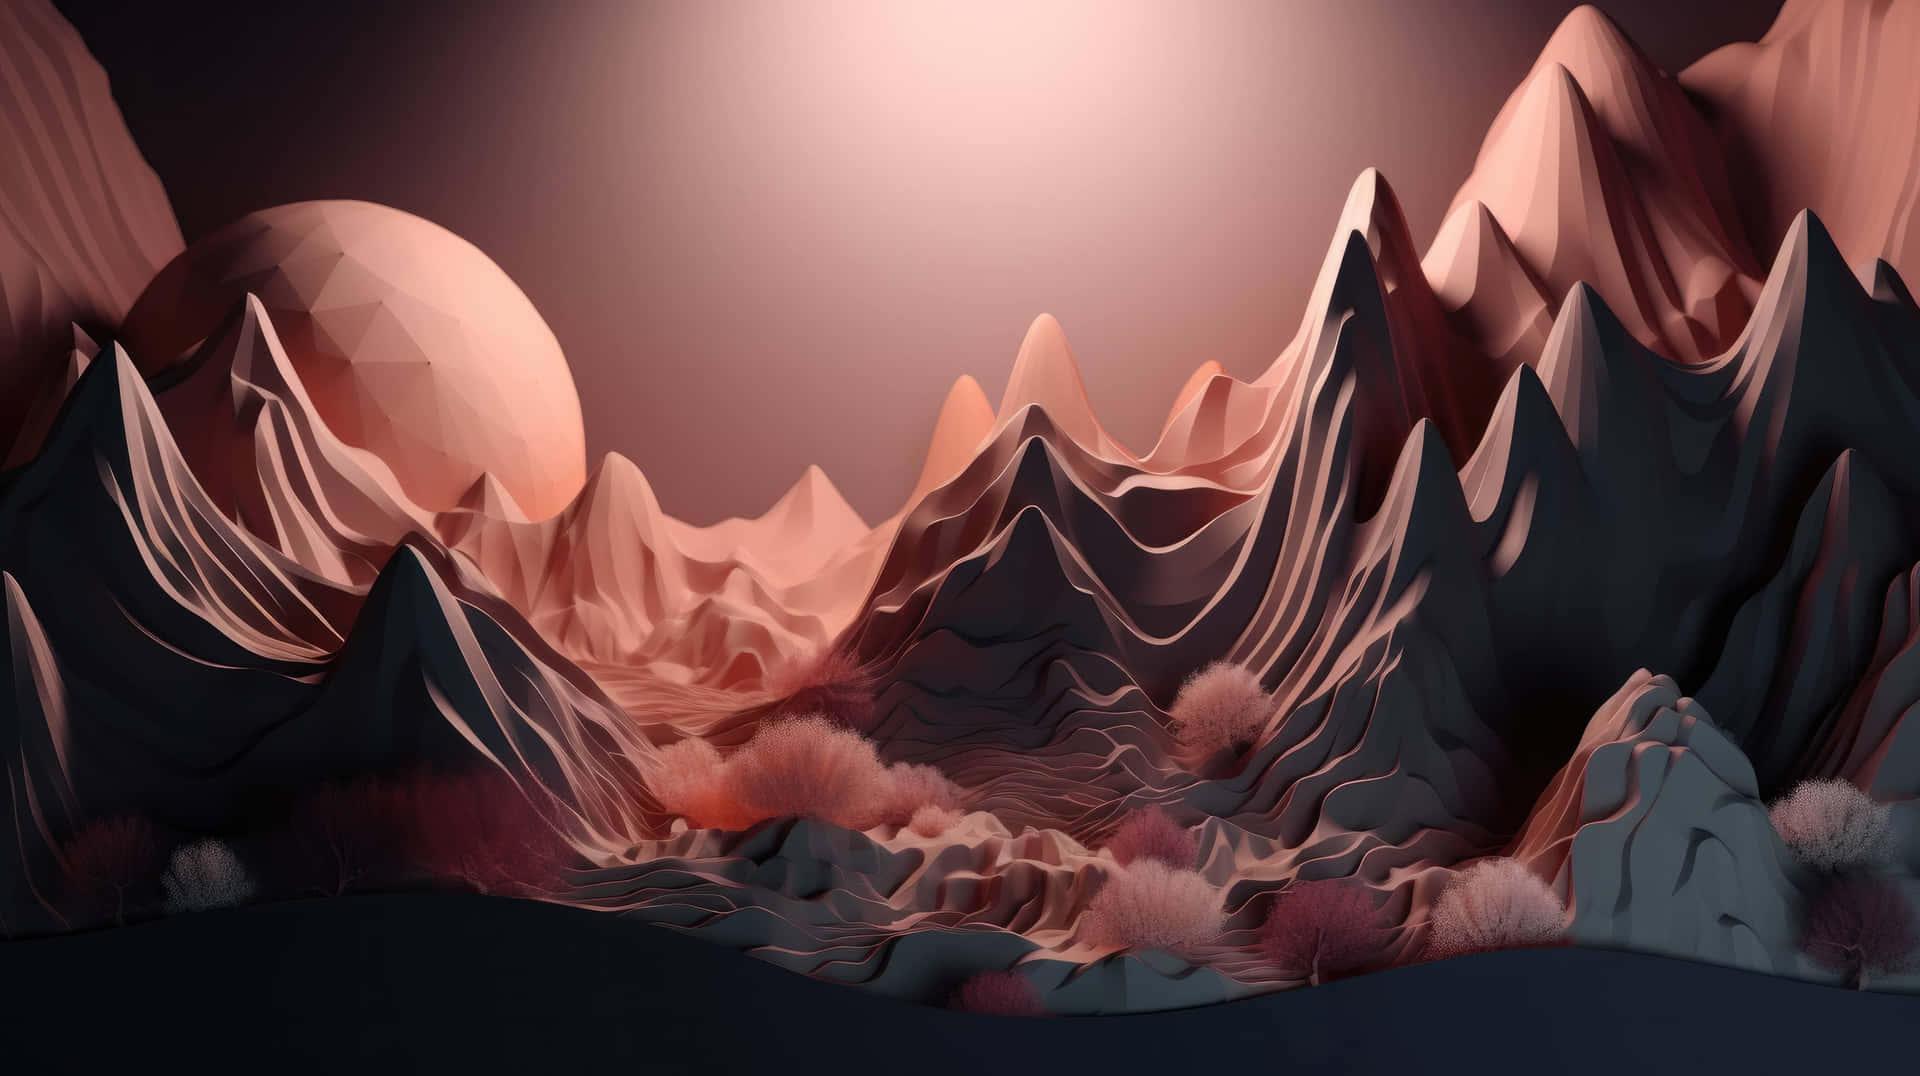 Surreal Mountain Landscapeat Dusk Wallpaper